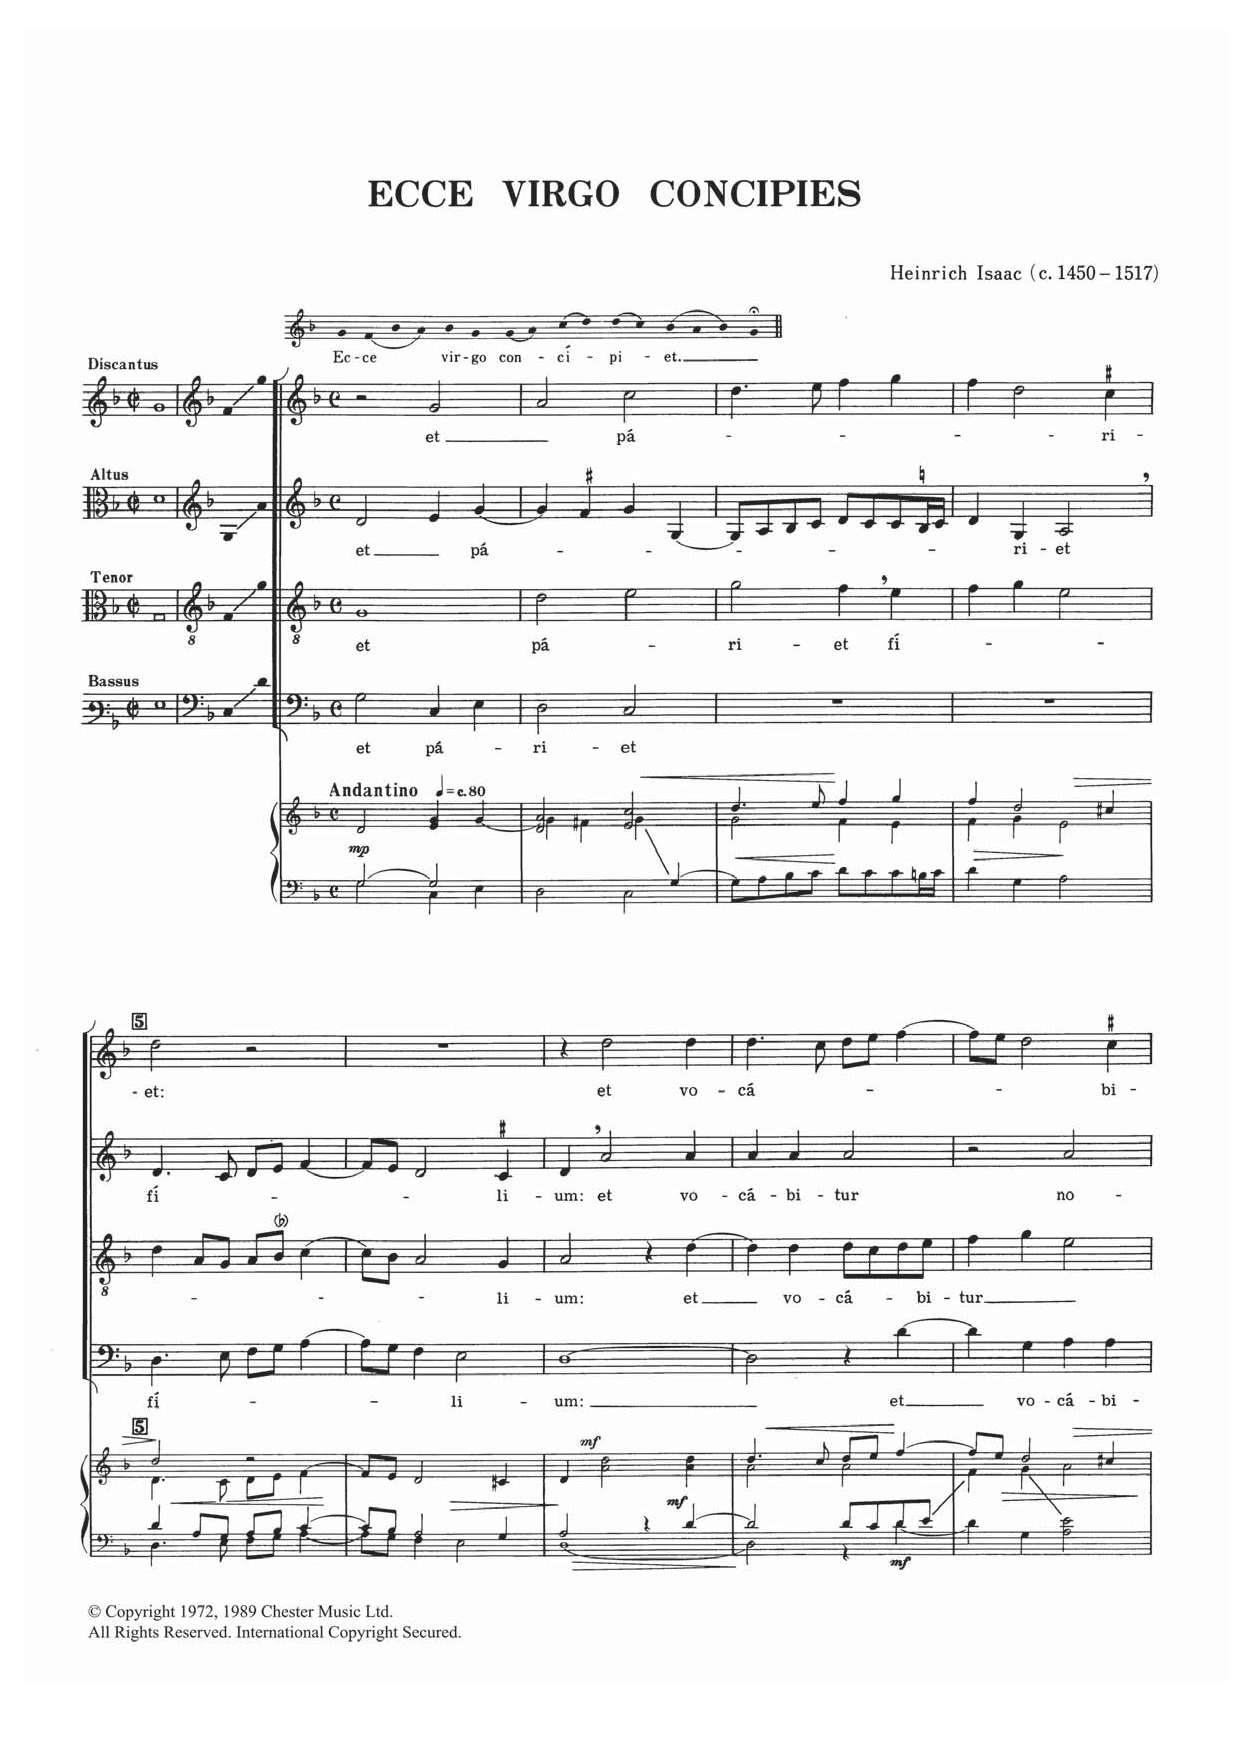 Heinrich Isaac Ecce Virgo Concipies sheet music notes and chords arranged for SATB Choir